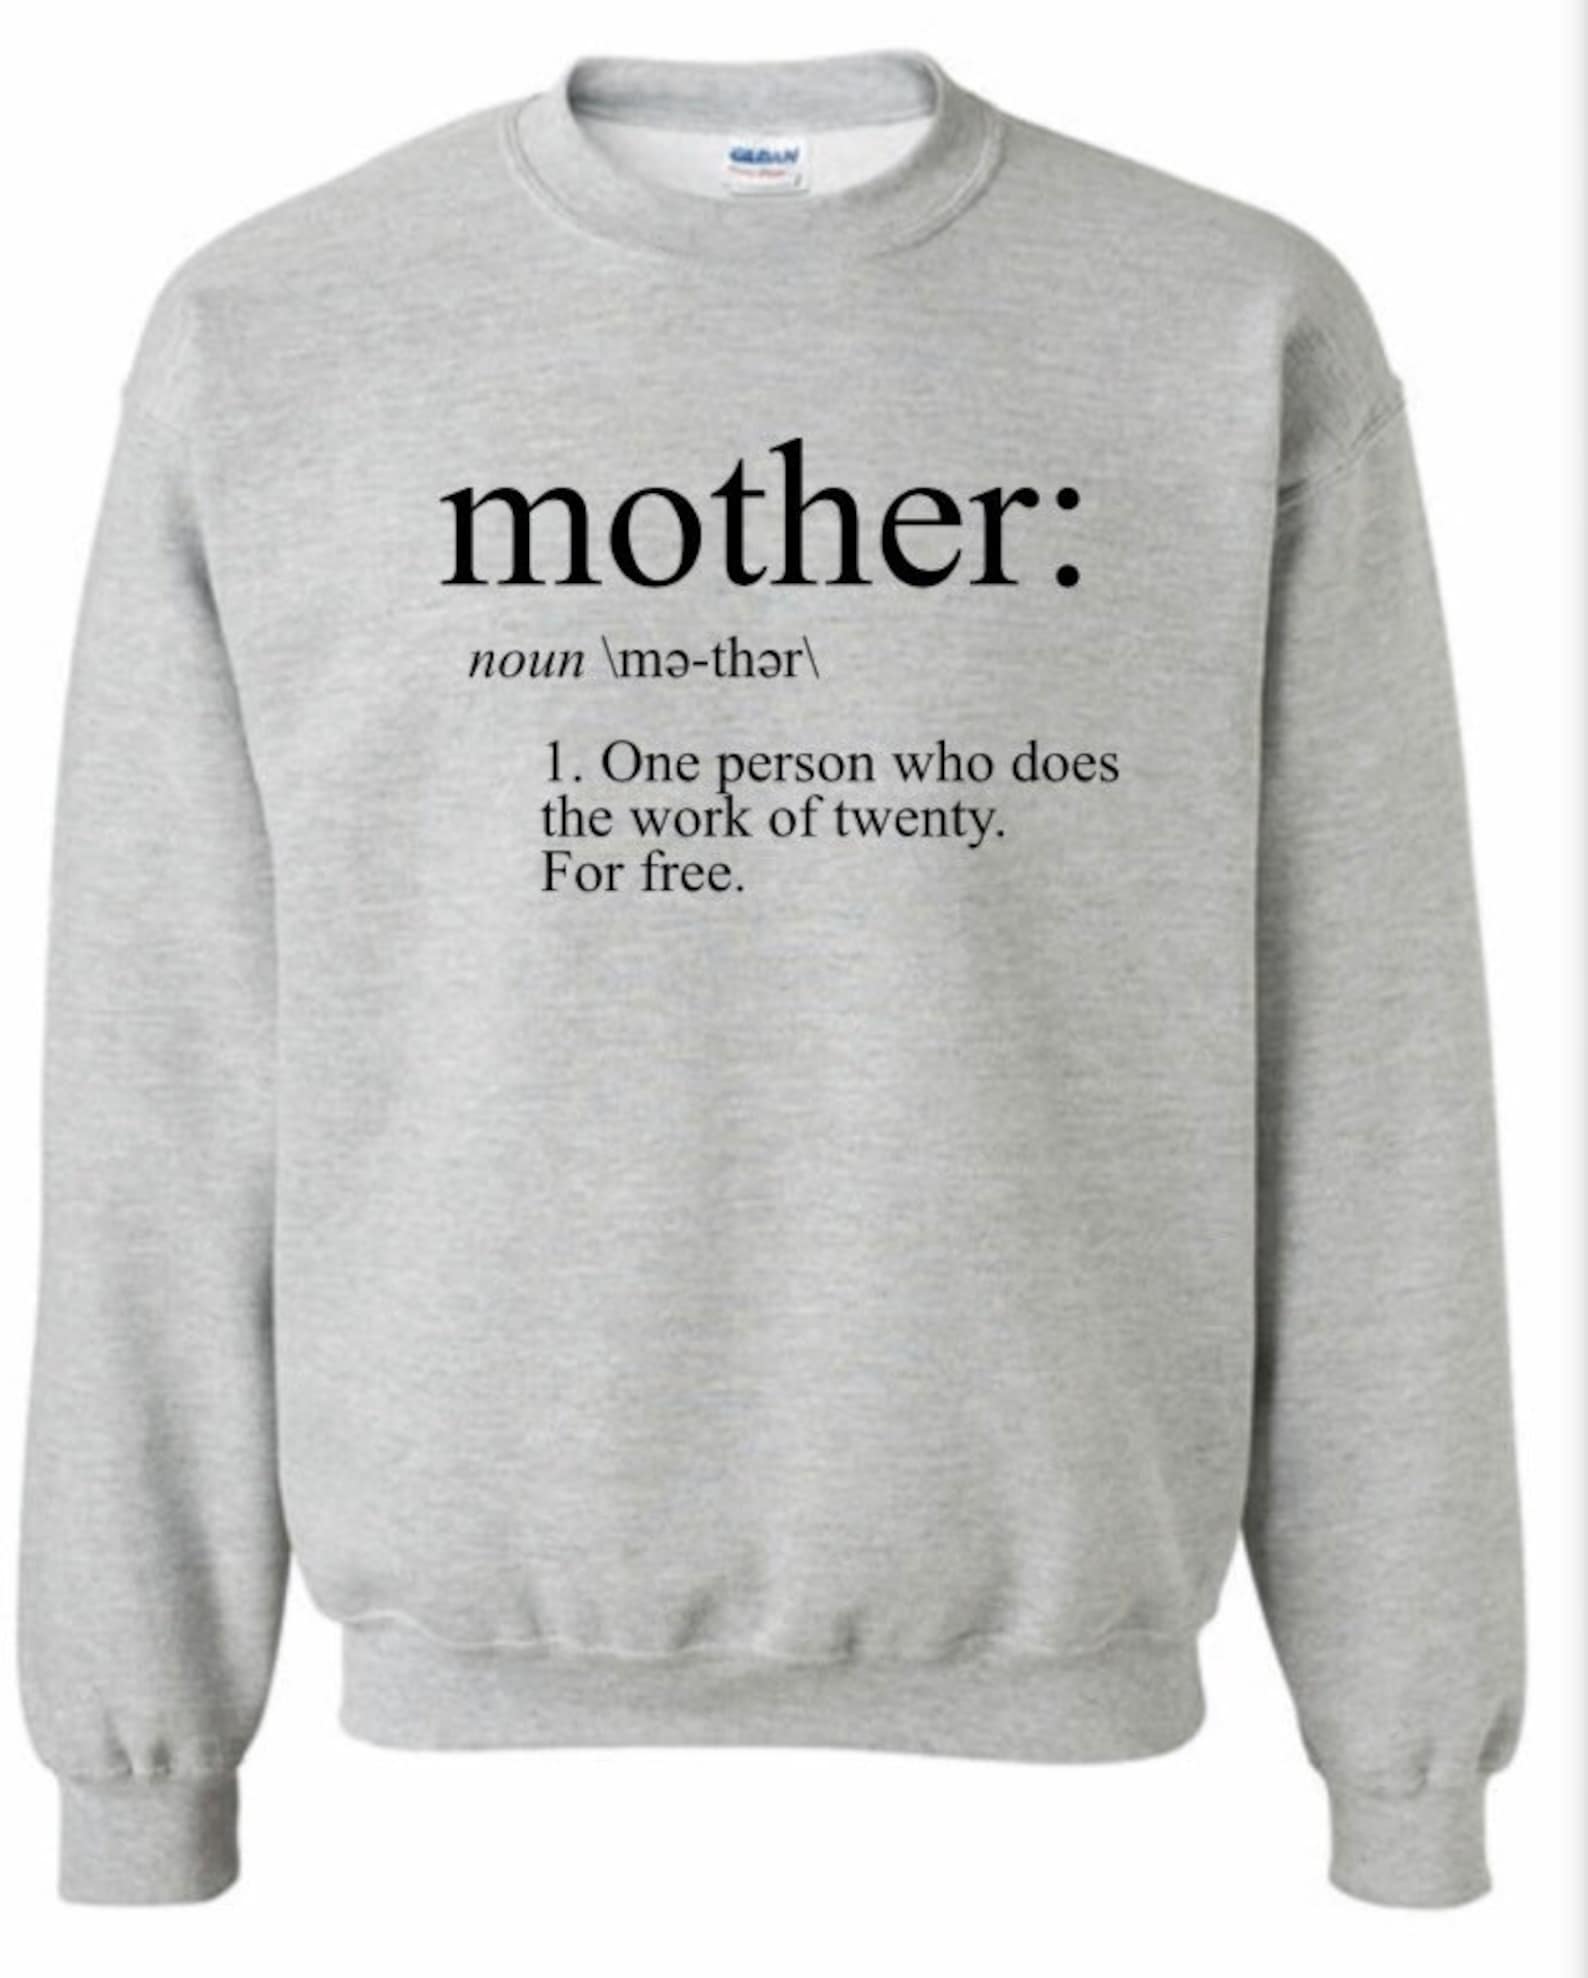 Mother crewneck sweatshirt mother jumper Mothers Day | Etsy